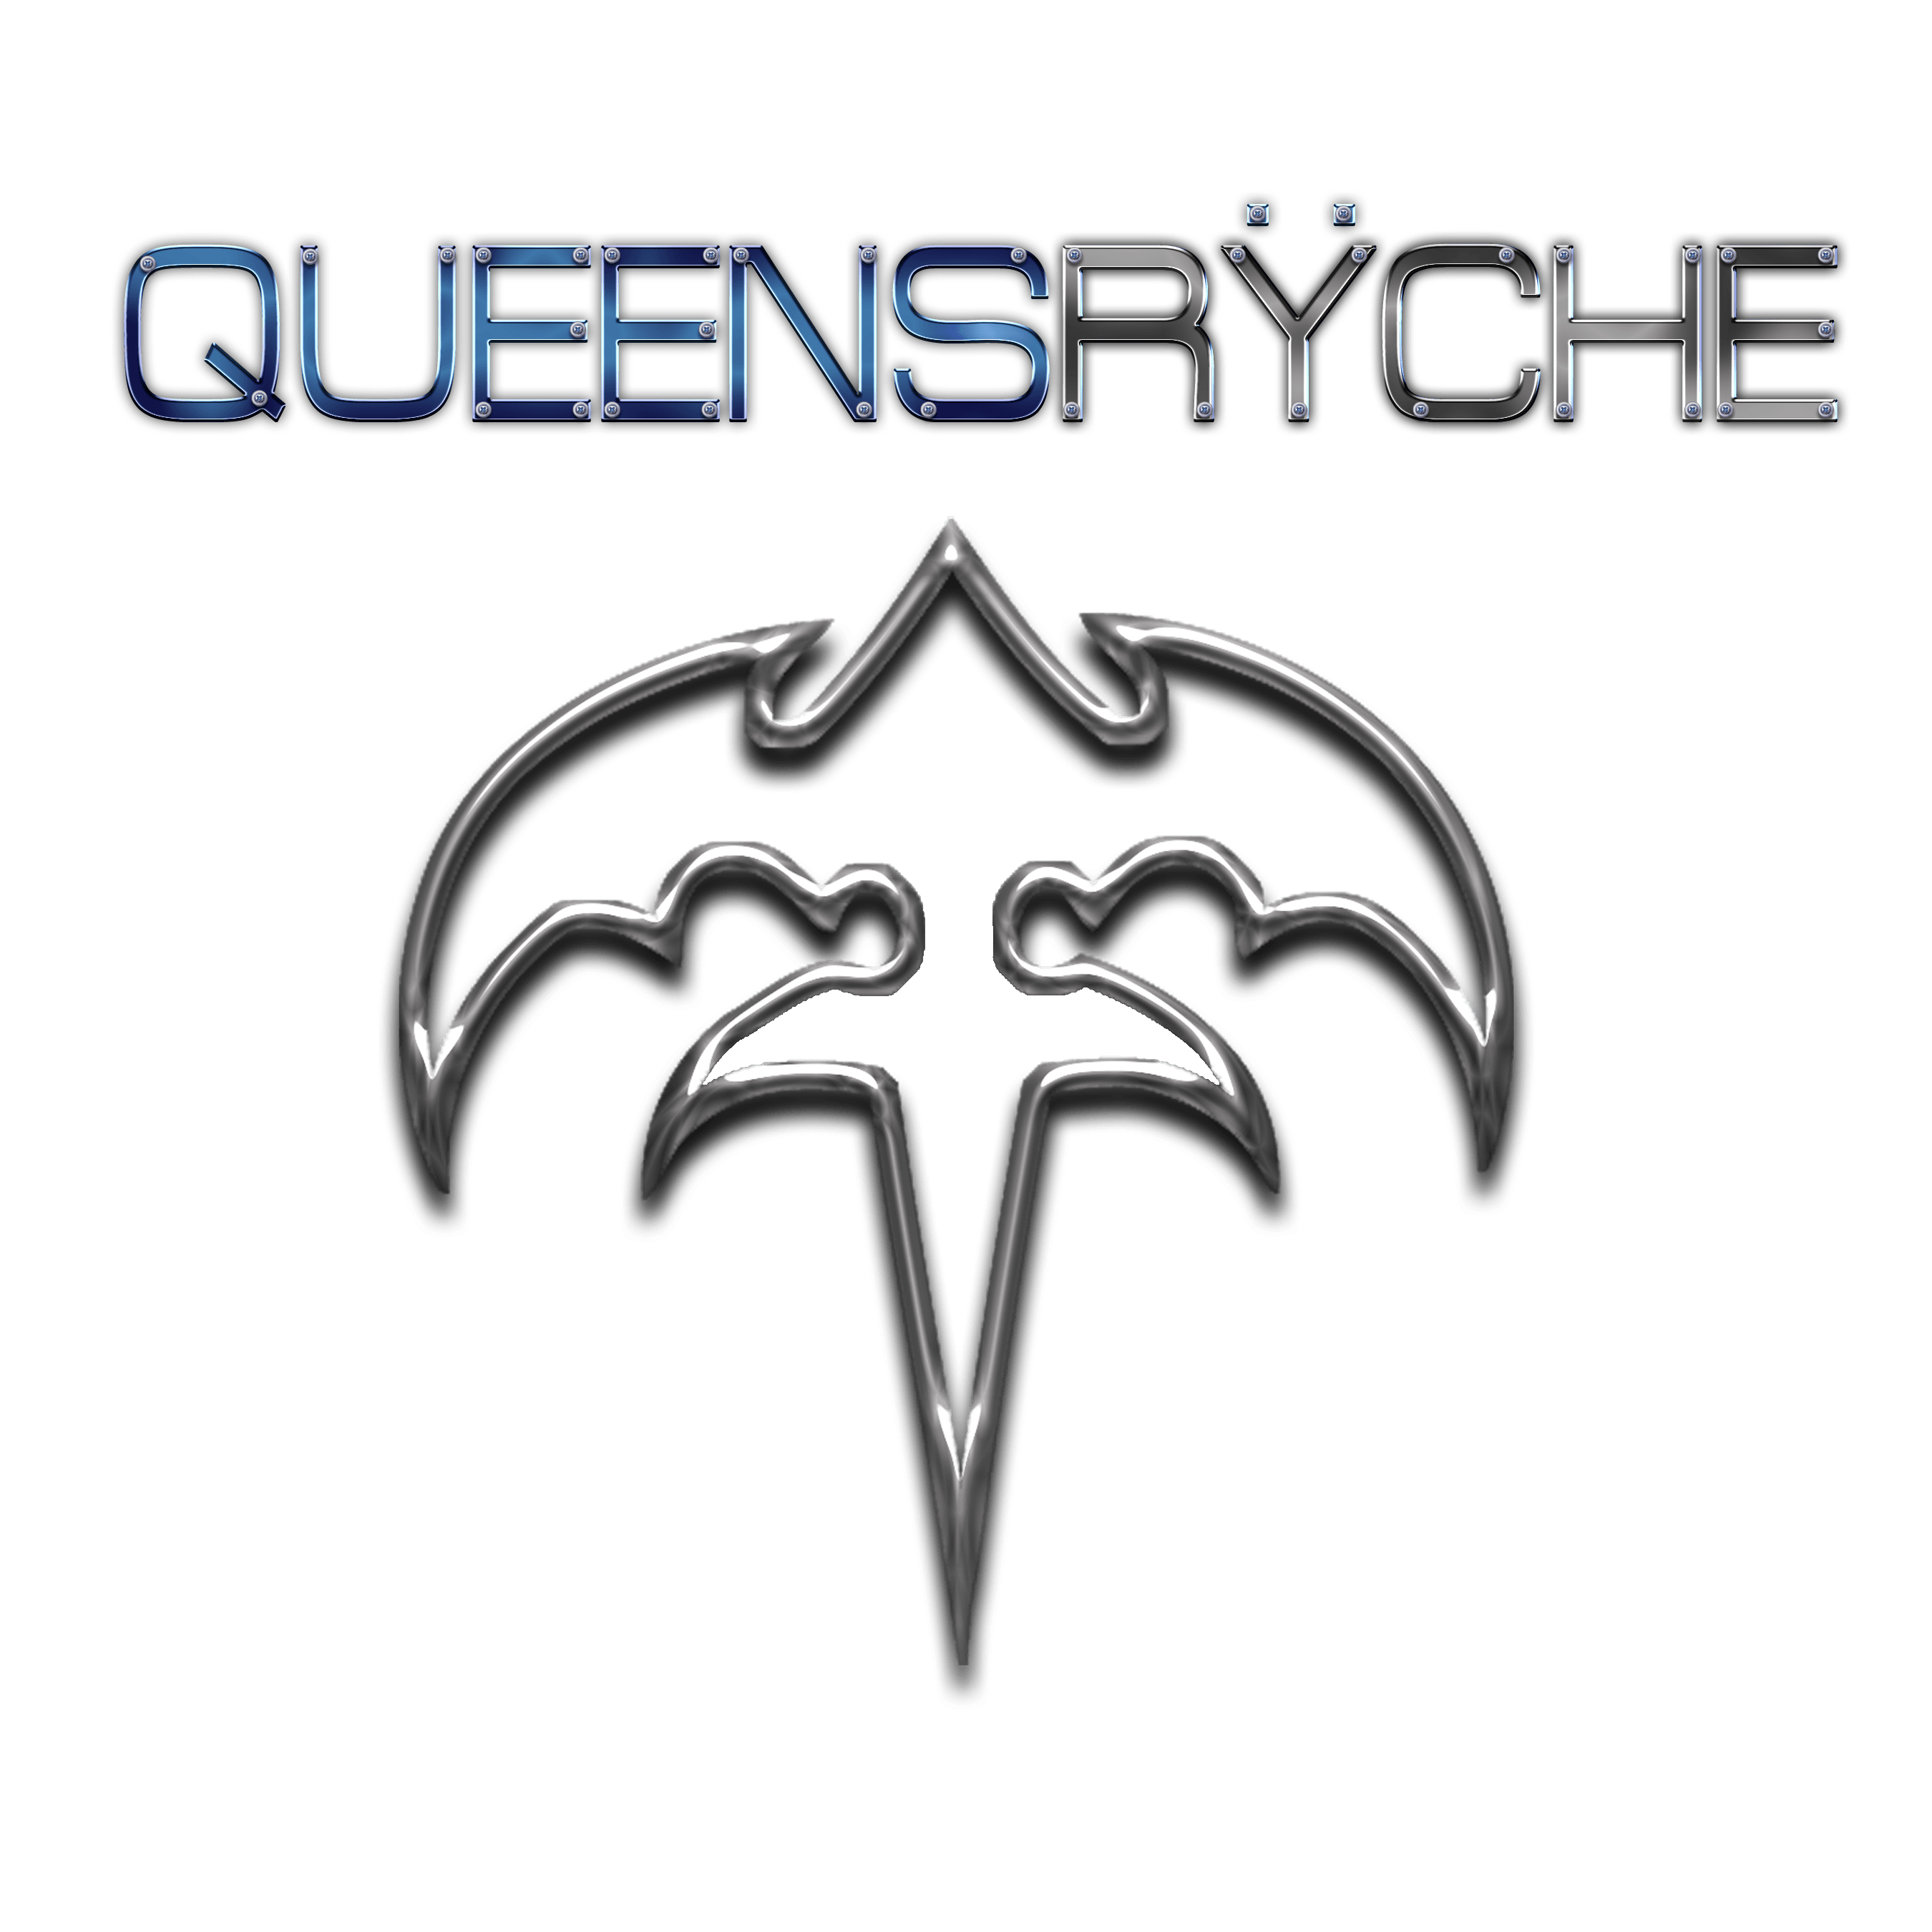 Queensryche Logo - Seaside Touring